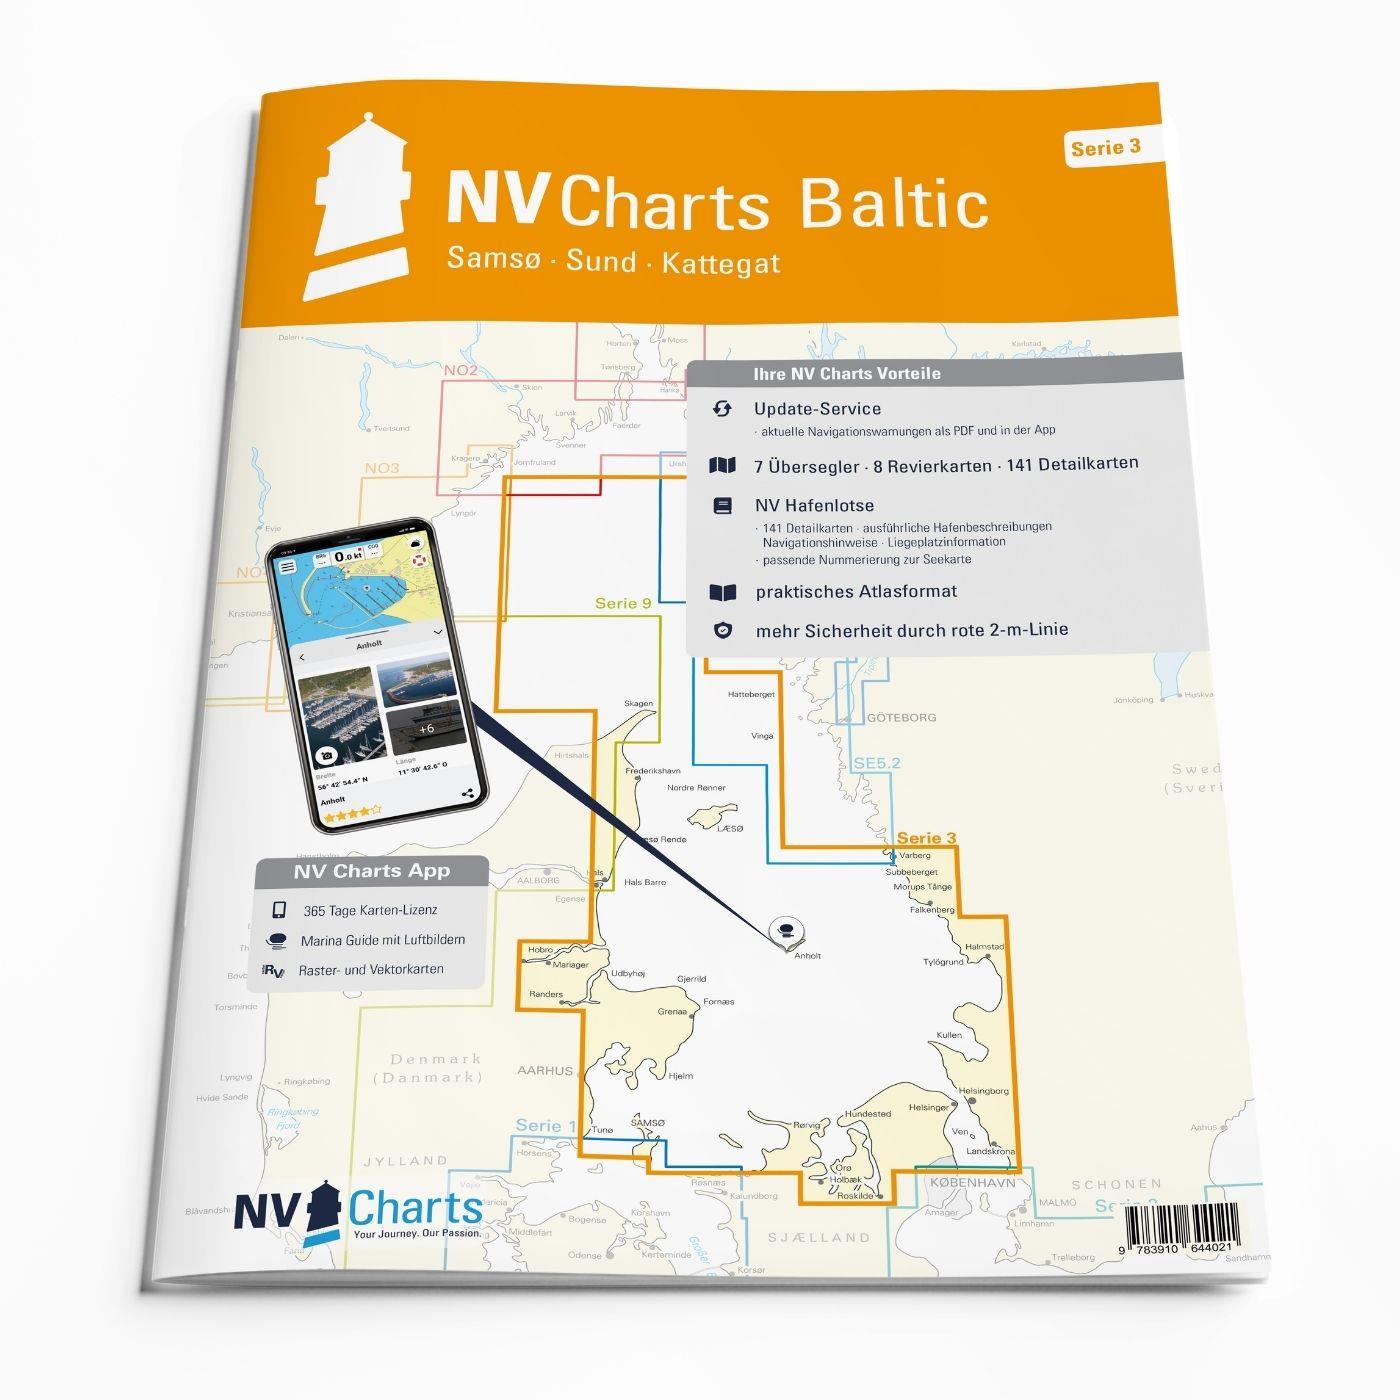 NV Charts Baltic Serie 3 West Denmark - Samsø - Sund - Kattegat